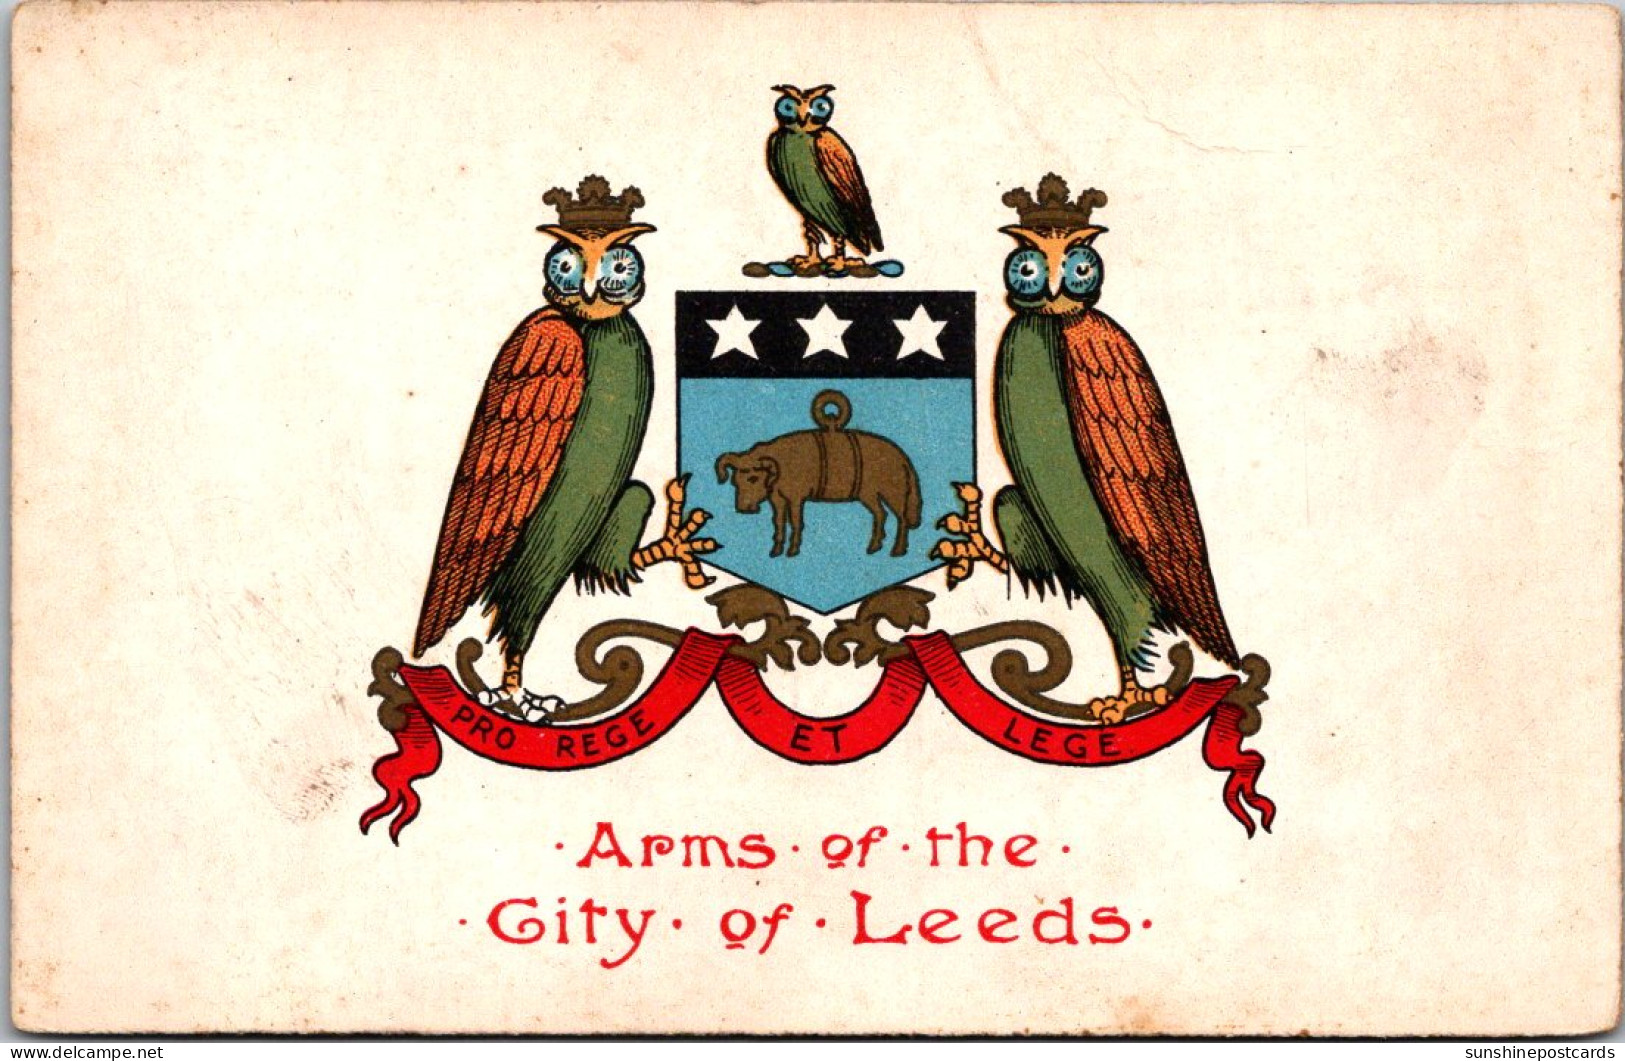 England Leeds Armas Of The City - Leeds